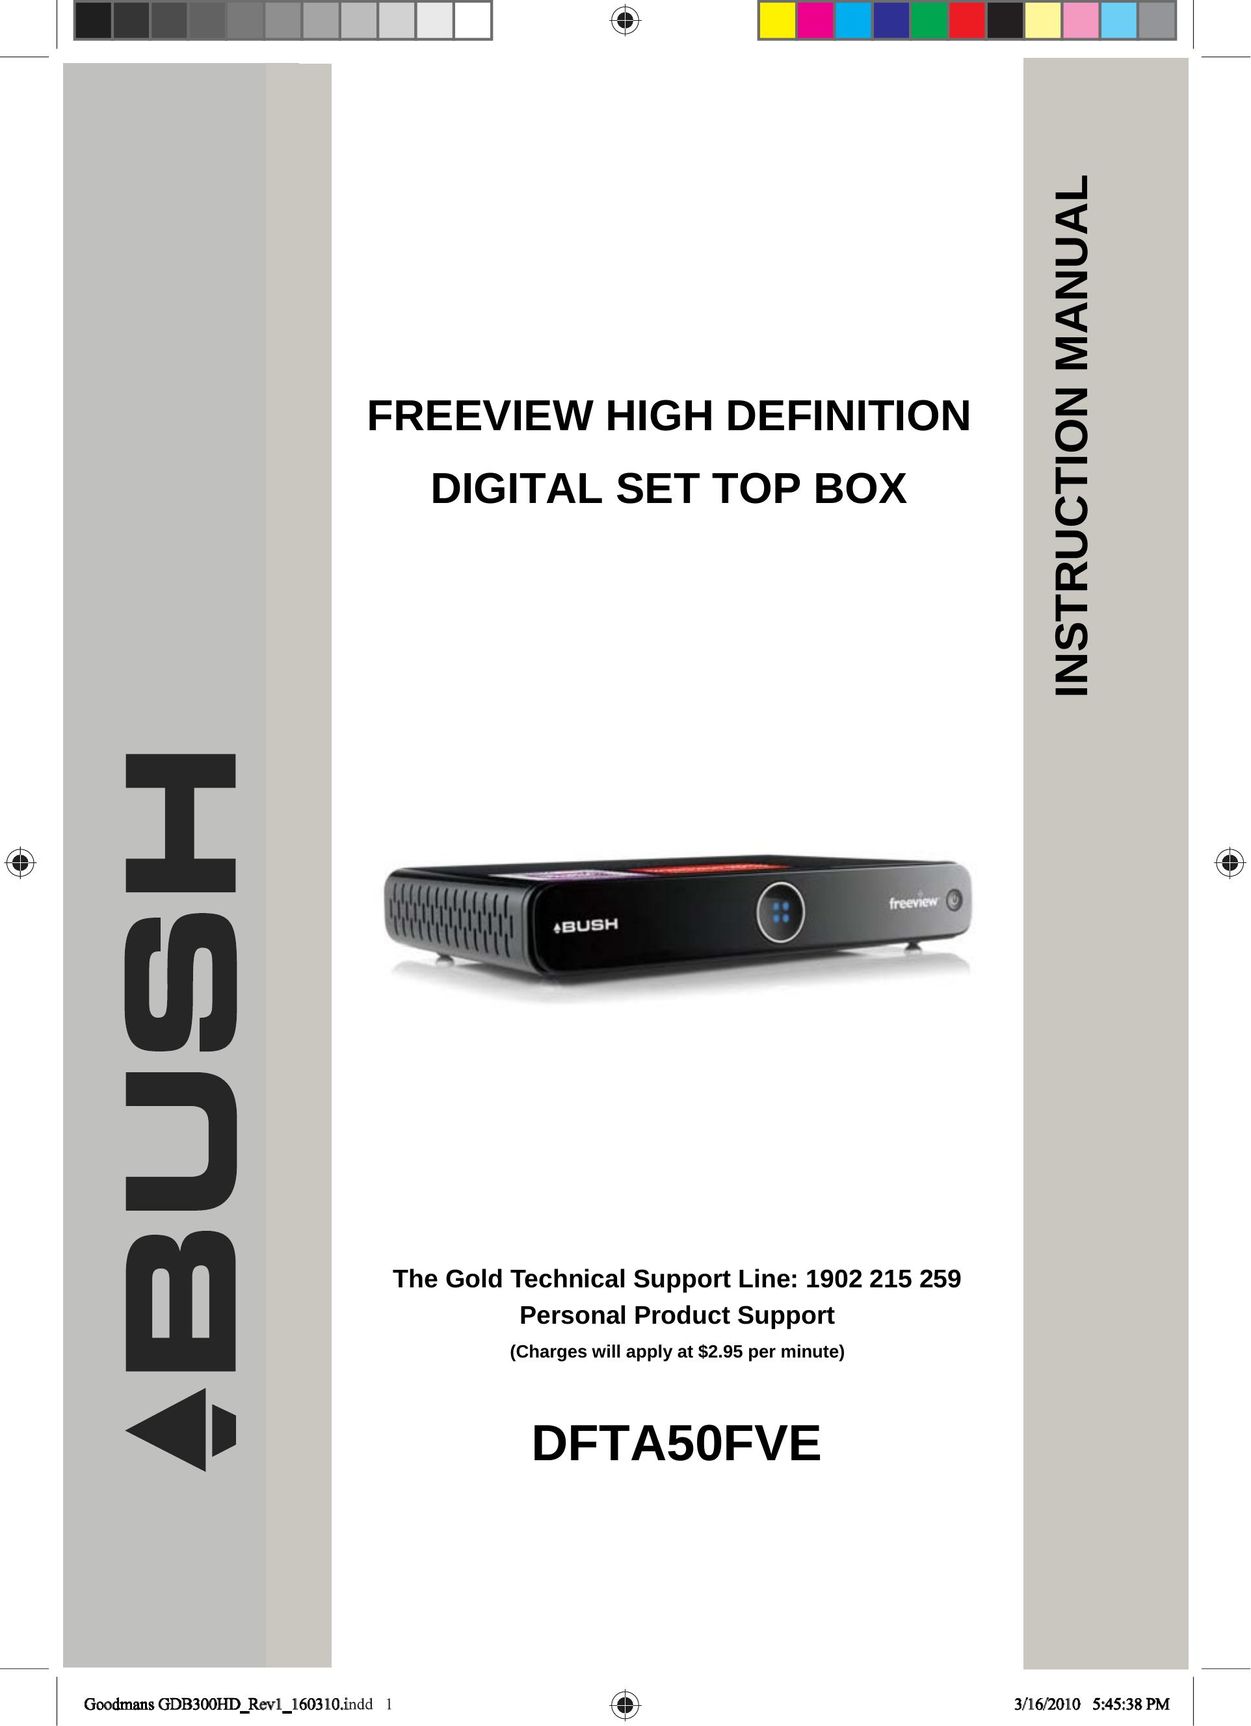 Bush DFTA50FVE Cable Box User Manual